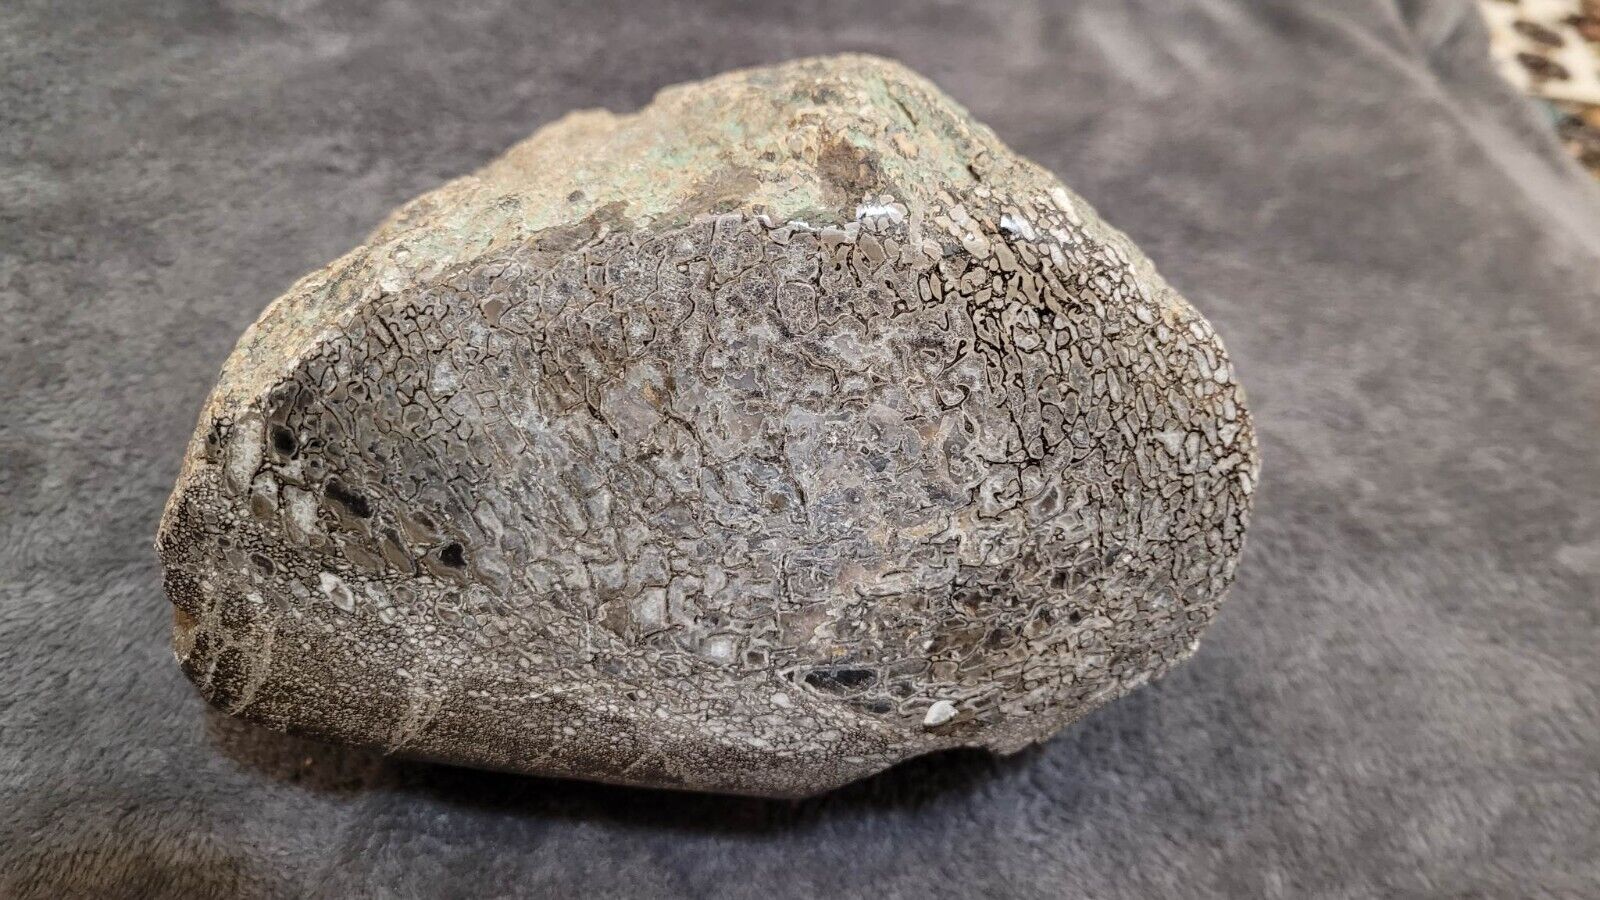 HUGE Dinosaur fossil gembone from Utah agate gem bone agatized 11.9 lbs